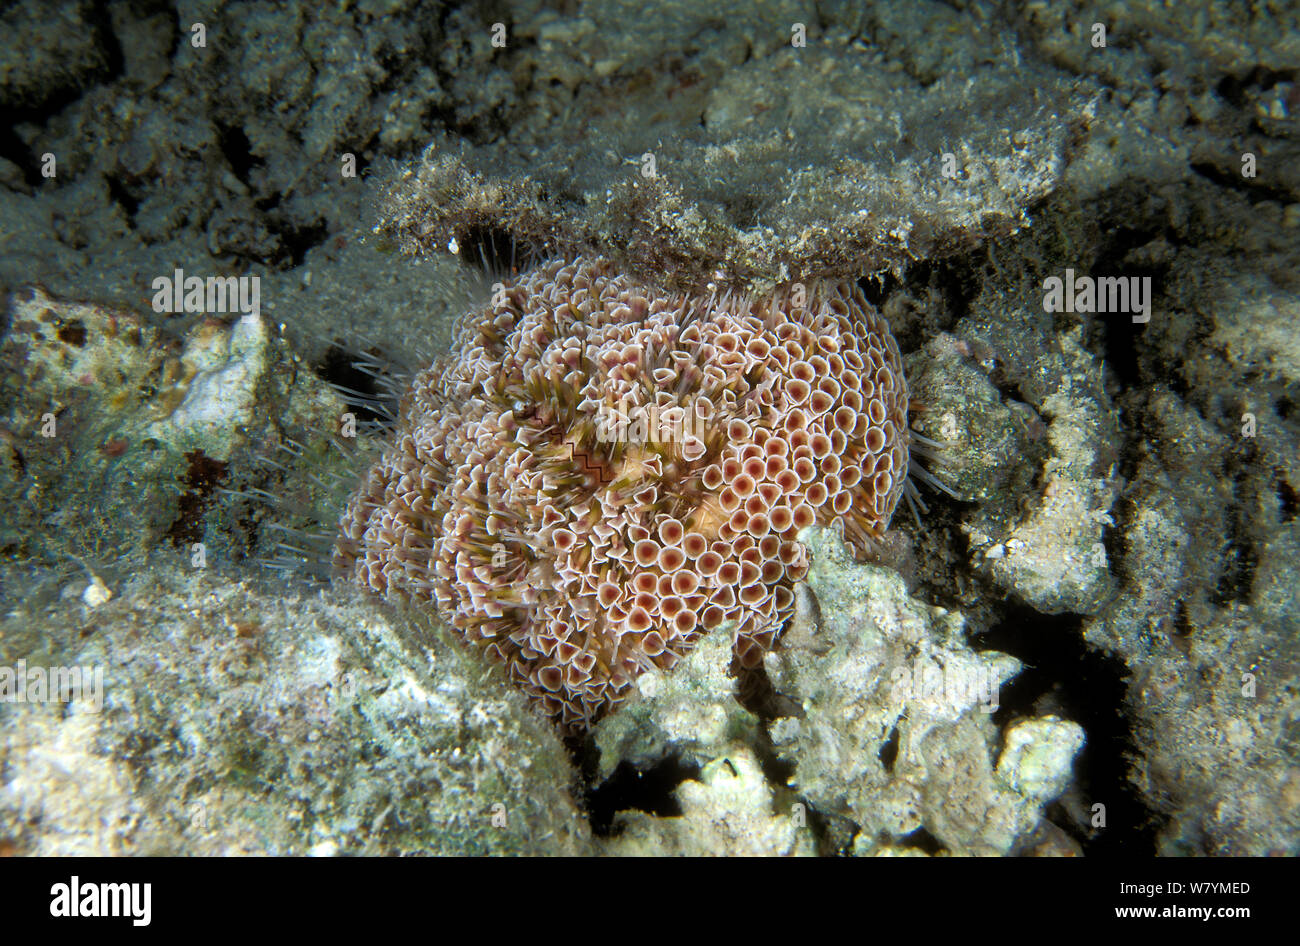 Flower urchin (Toxopneustes pileolus), a poisonous sea-urchin, New Caledonia, Pacific Ocean. Stock Photo